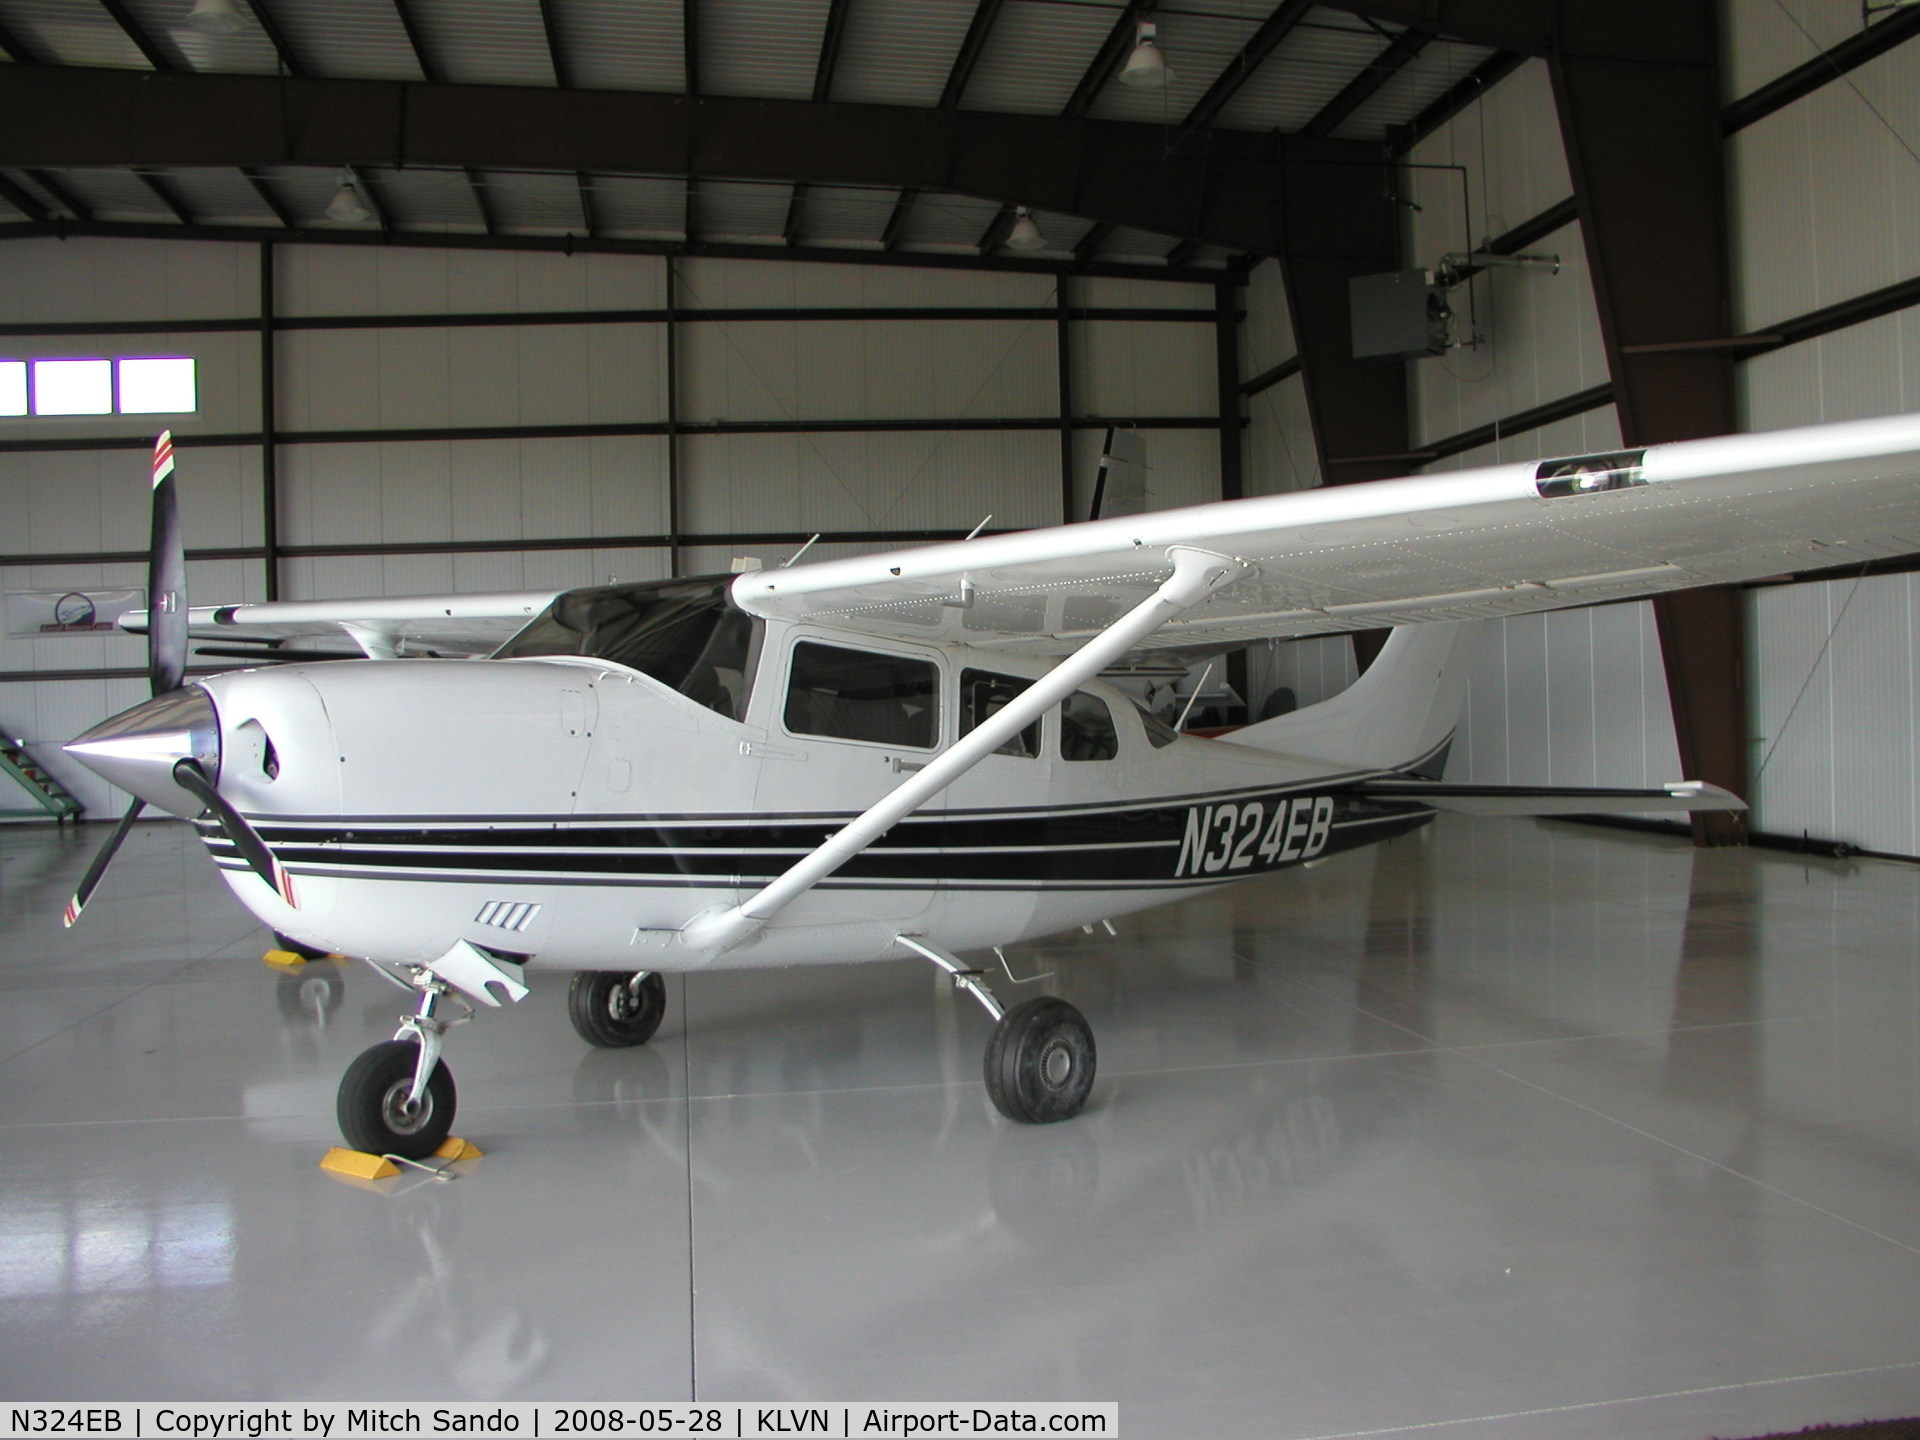 N324EB, 2003 Cessna 206H Stationair C/N 20608190, Parked inside the Aircraft Resource Center hangar.